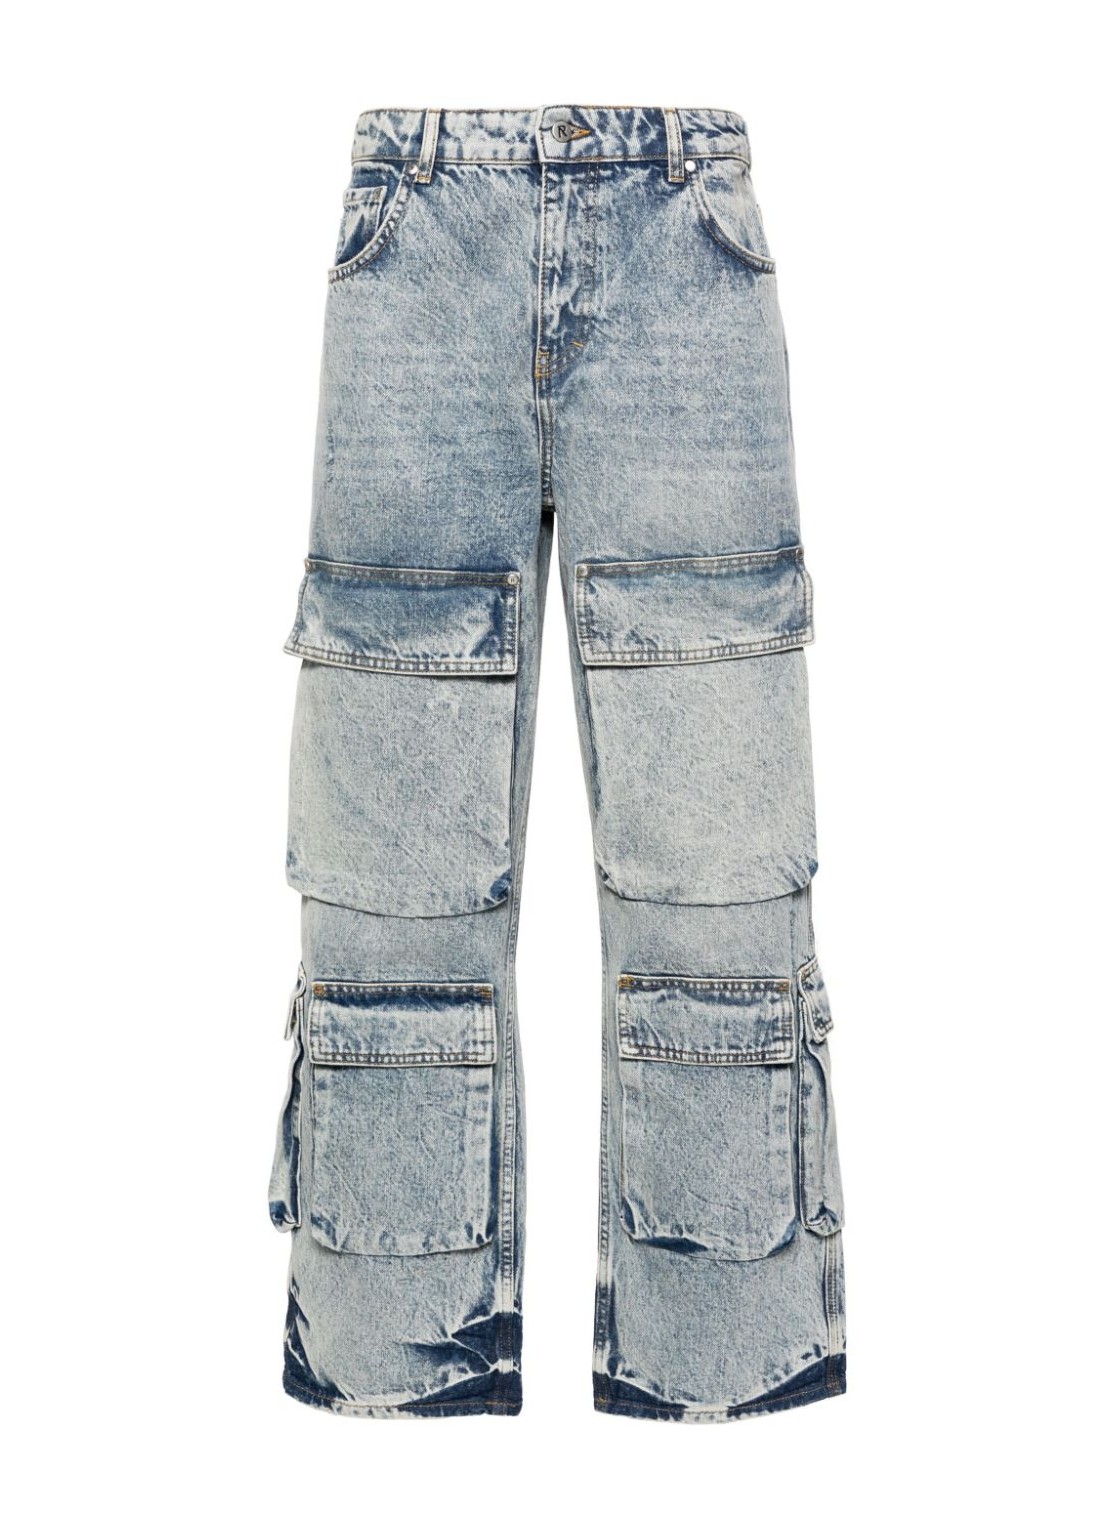 Pantalon jeans represent denim manr3ca cargo denim - mlm6090 60 talla 33
 